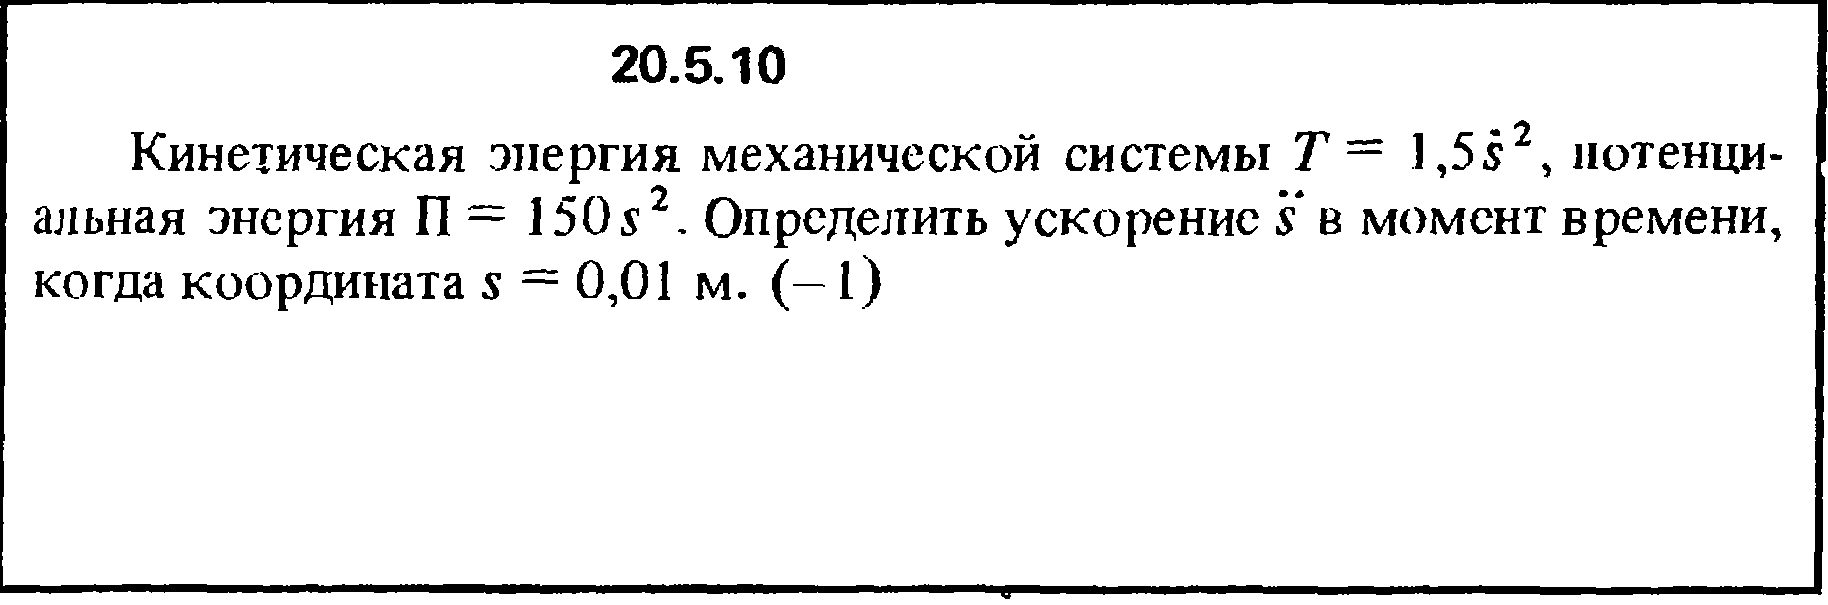 Решение 20.5.10 из сборника (решебника) Кепе О.Е. 1989